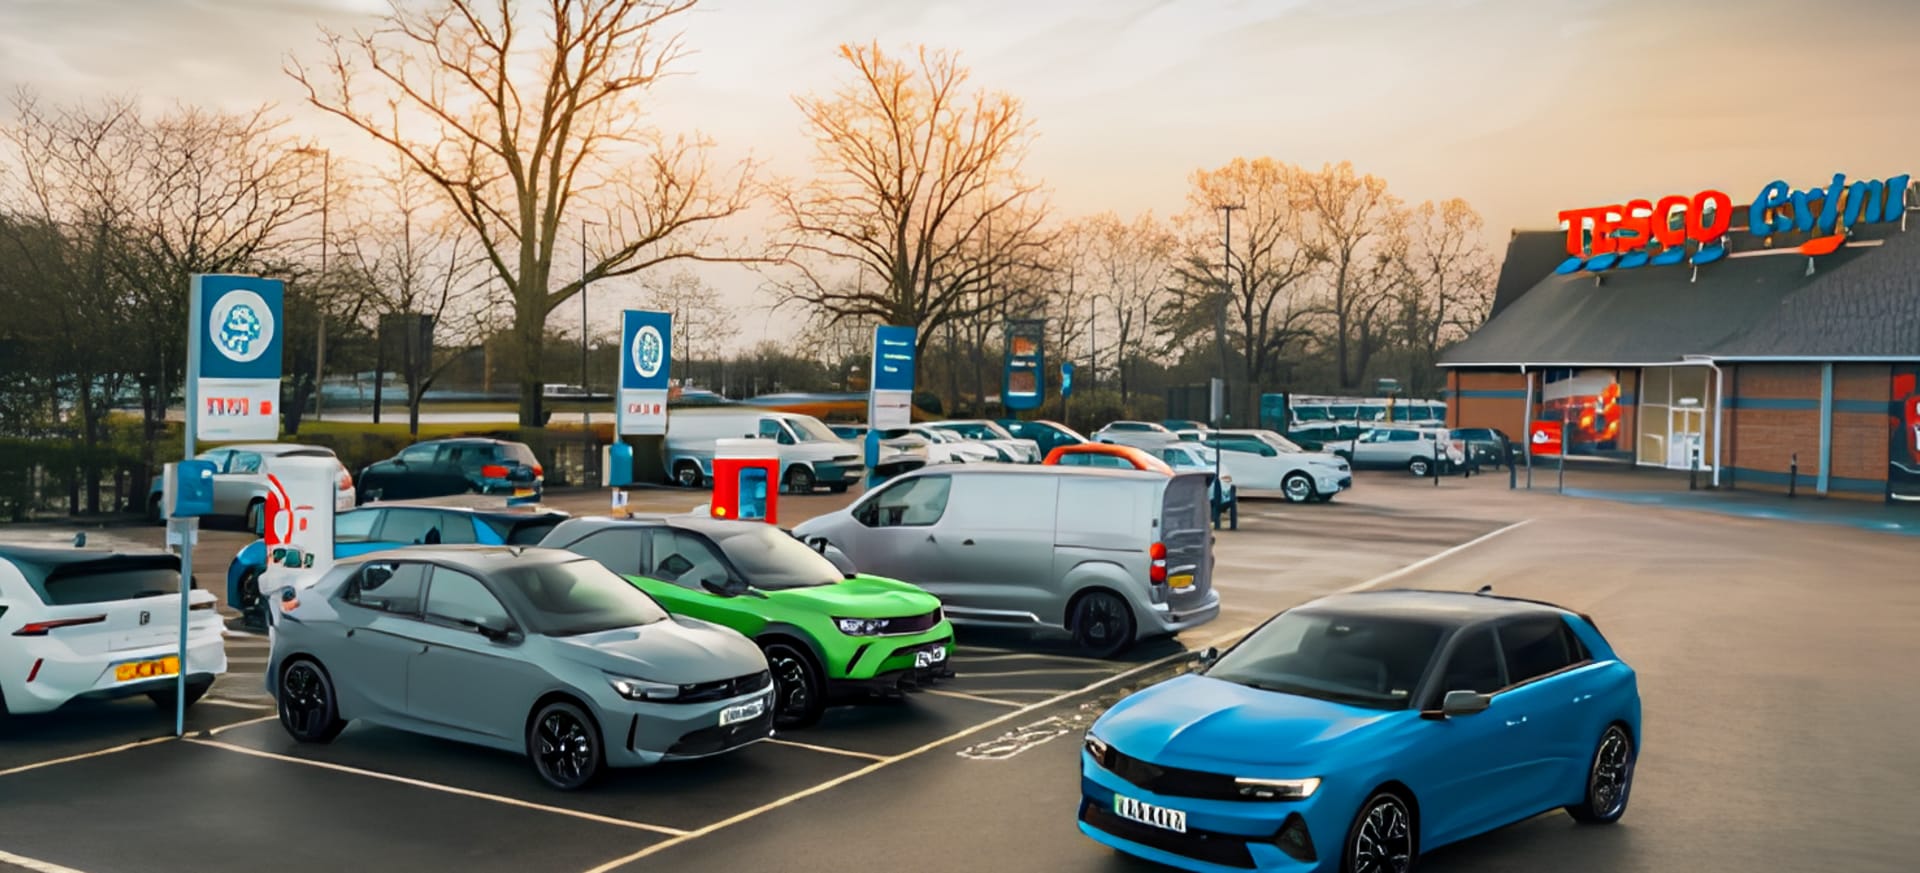 Vauxhall &amp; Tesco Charging Partnership